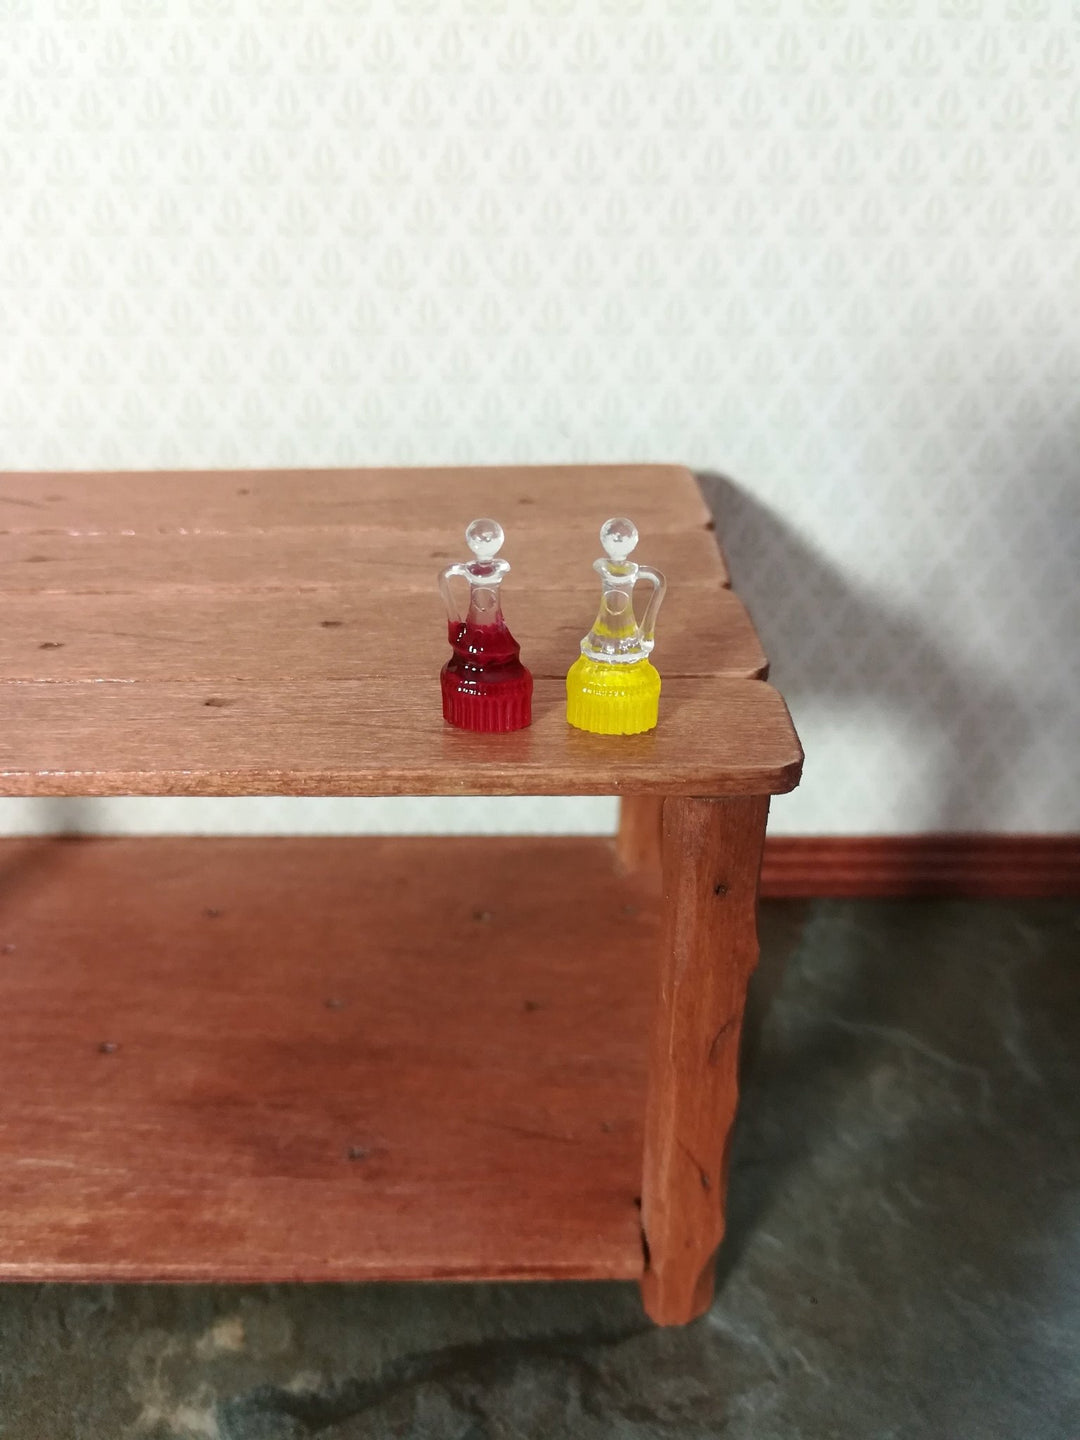 Dollhouse Miniature Oil & Vinegar Cruet Bottles 1:12 Scale Kitchen Accessory - Miniature Crush